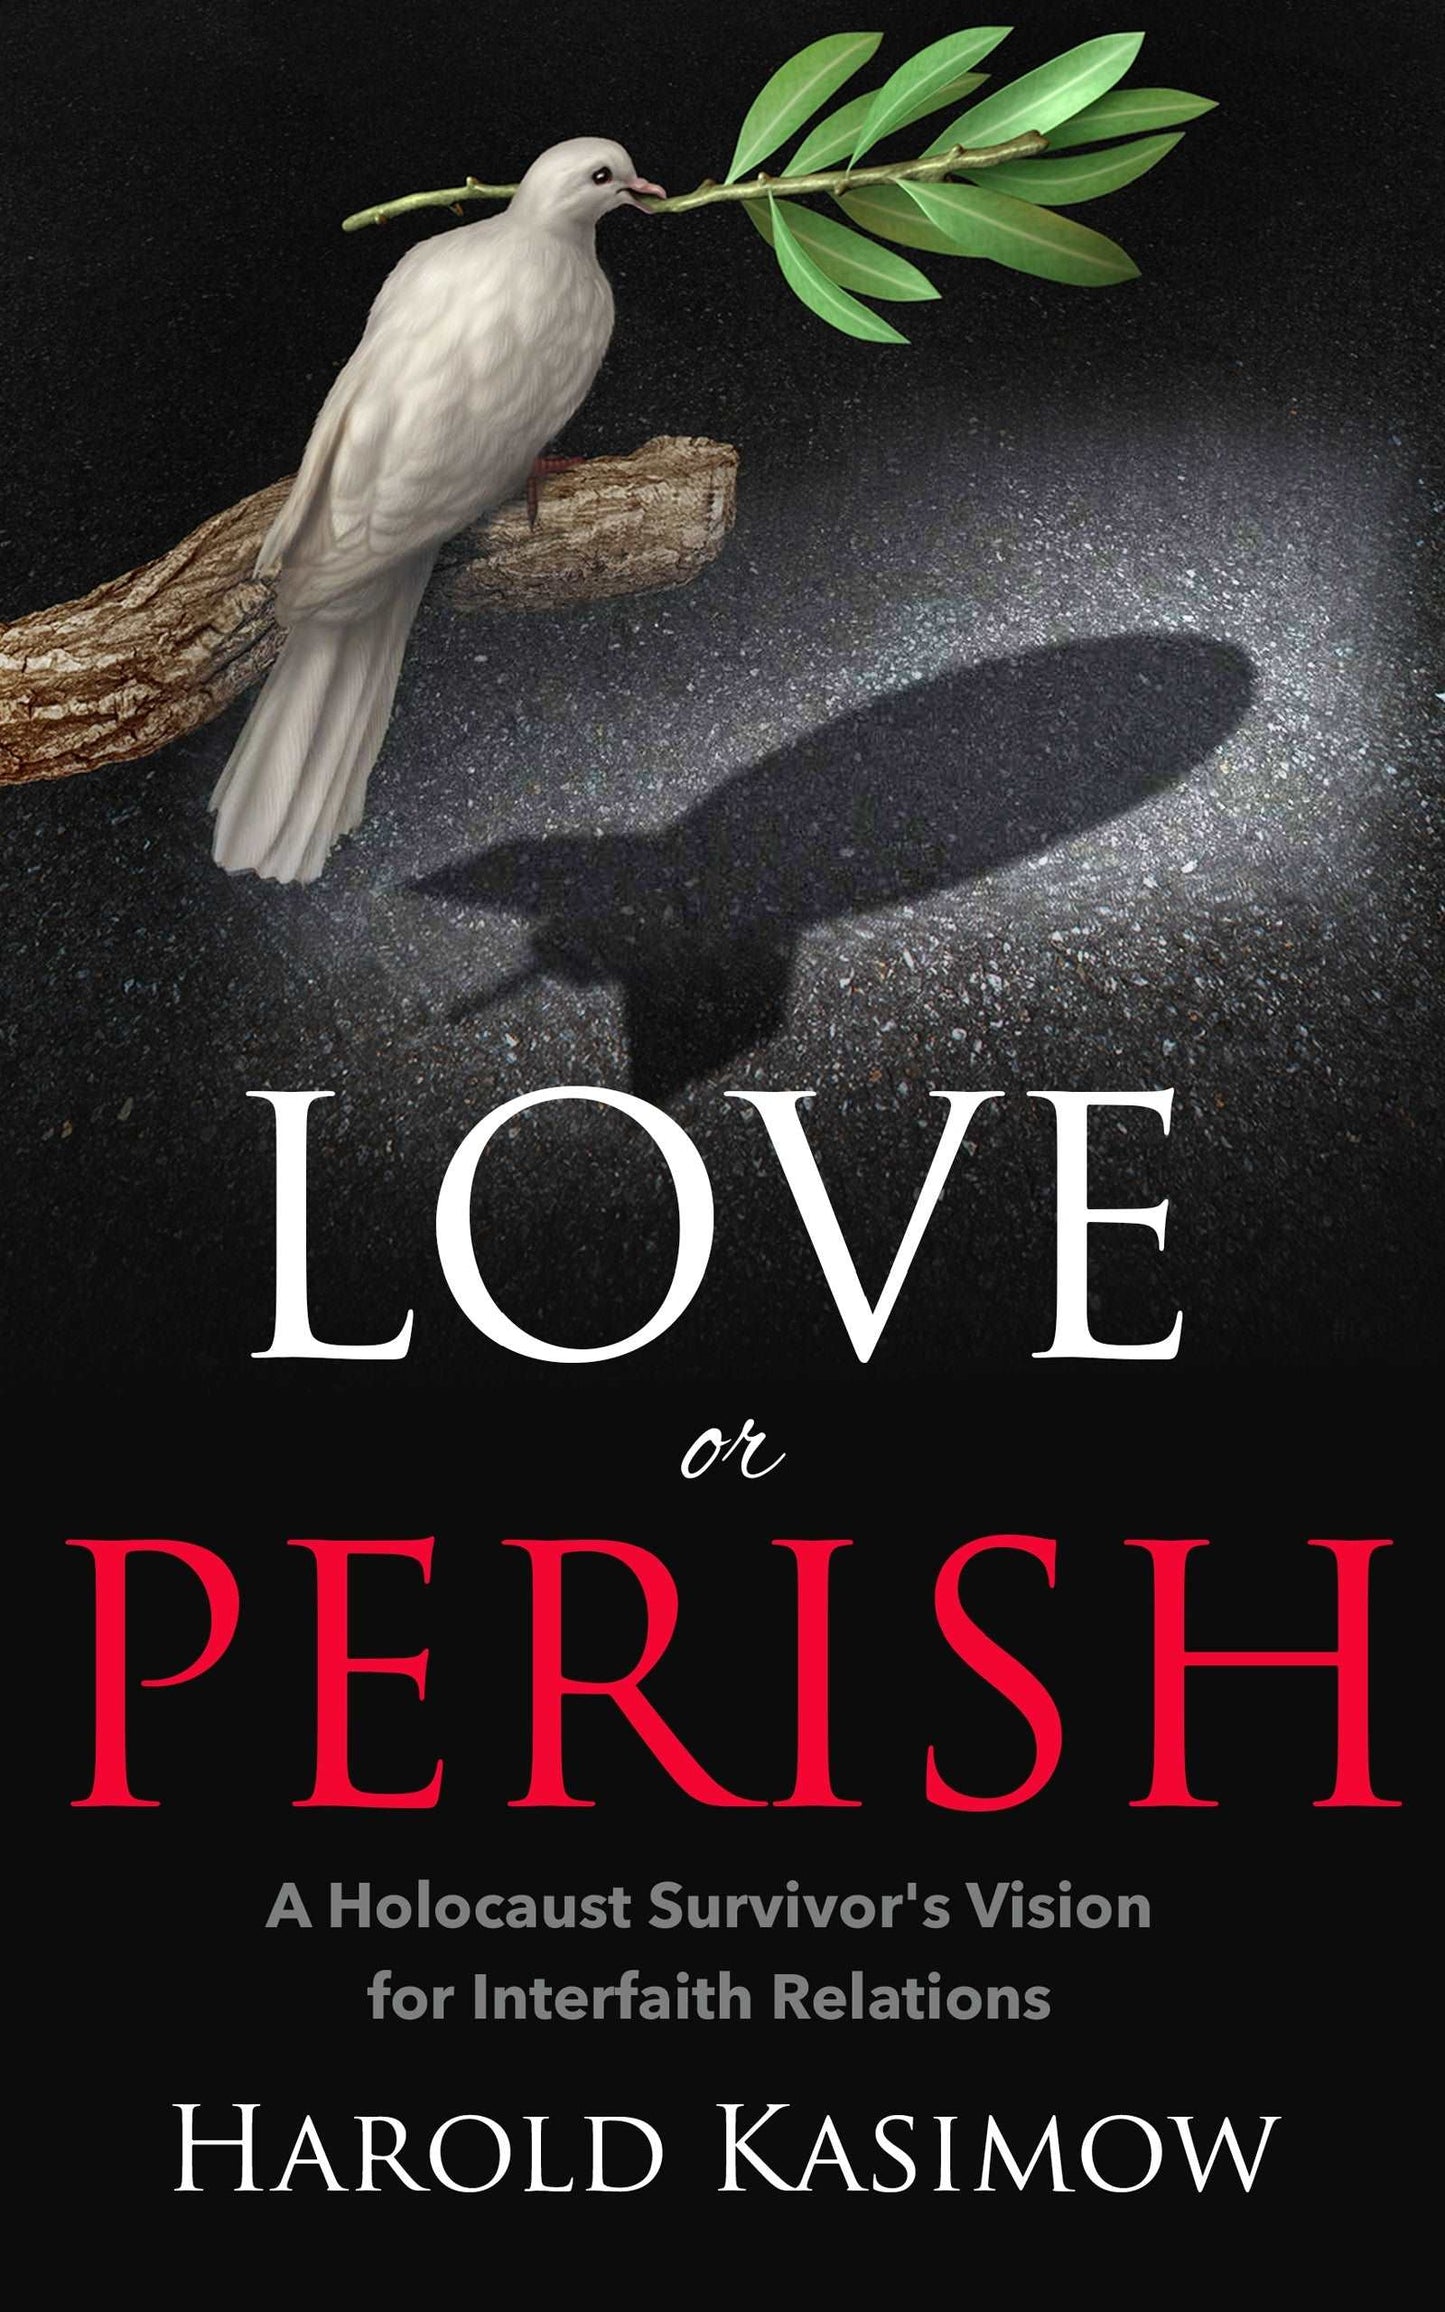 Love or Perish -  A Holocaust Survivor's Vision for Interfaith Peace